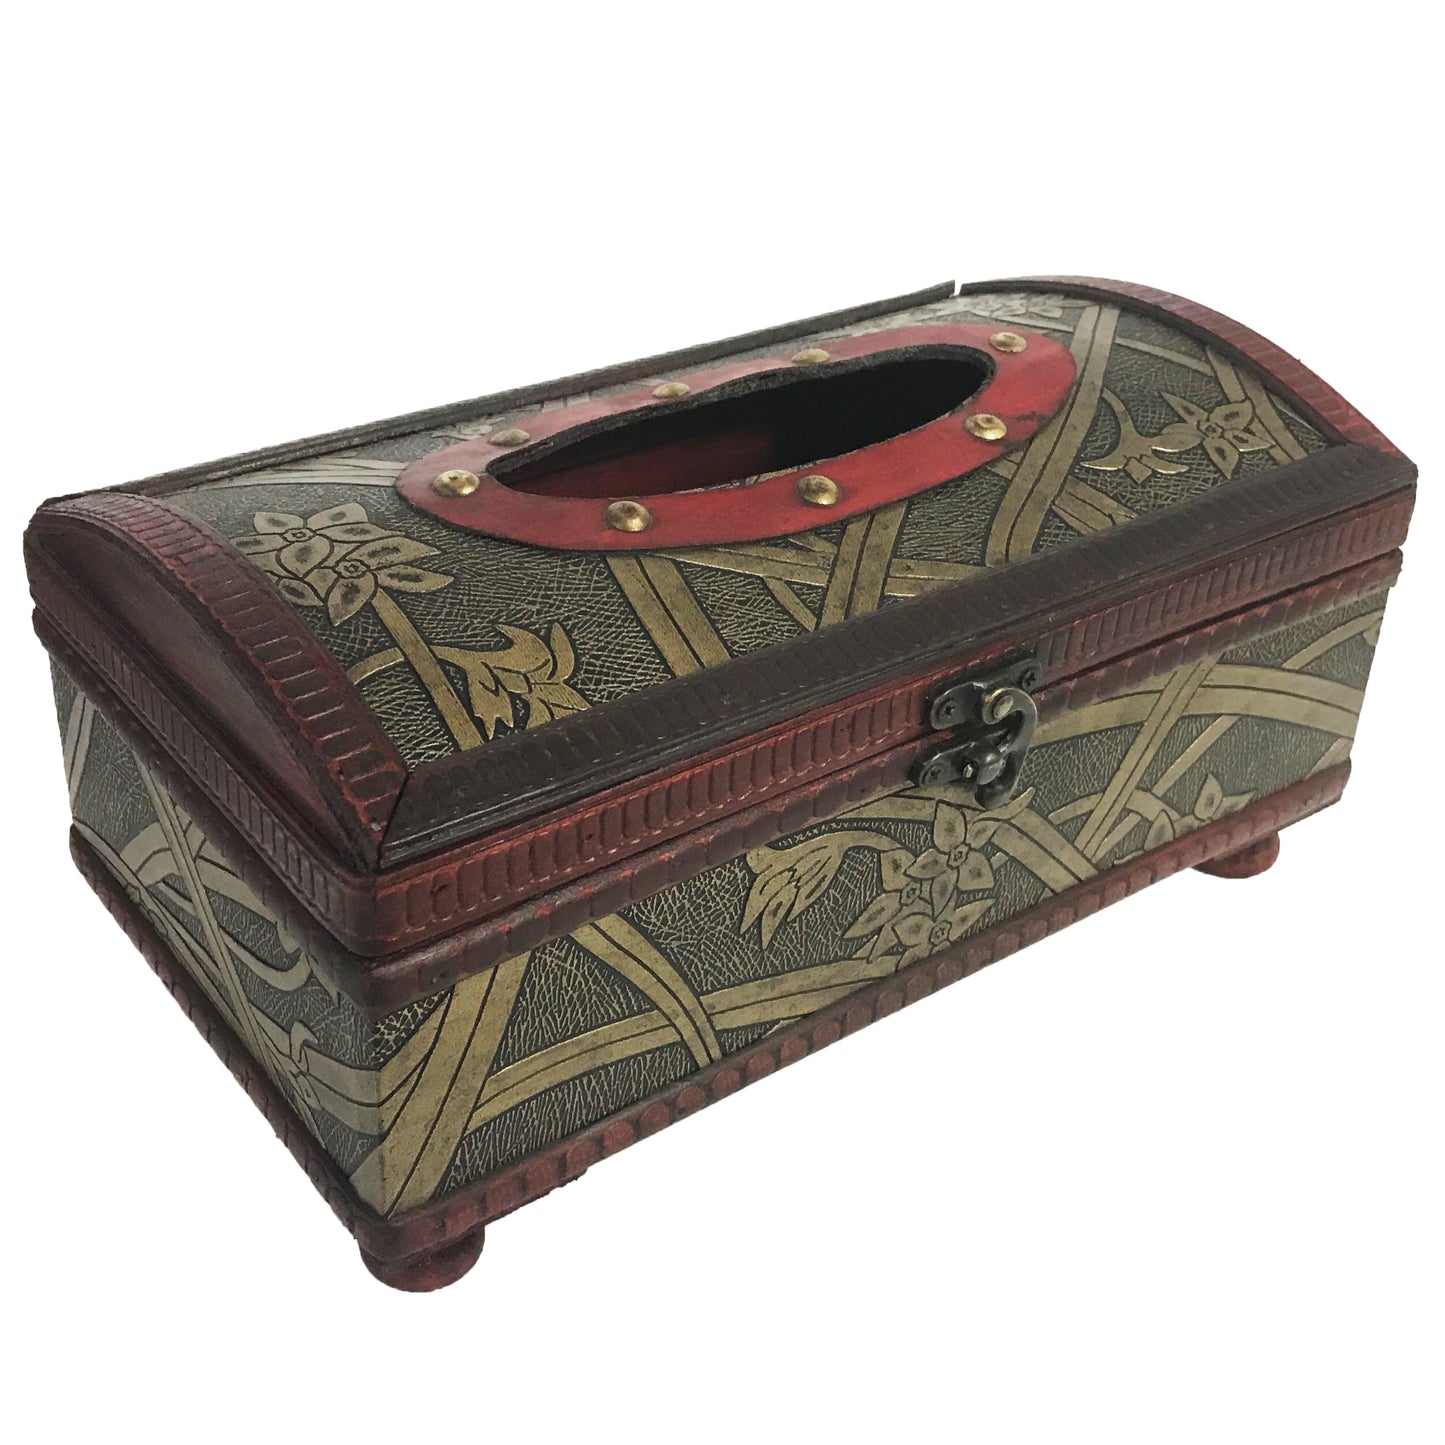 Allgala Wooden Box Antique Wooden Tissue Box Holder, Arch Top Style